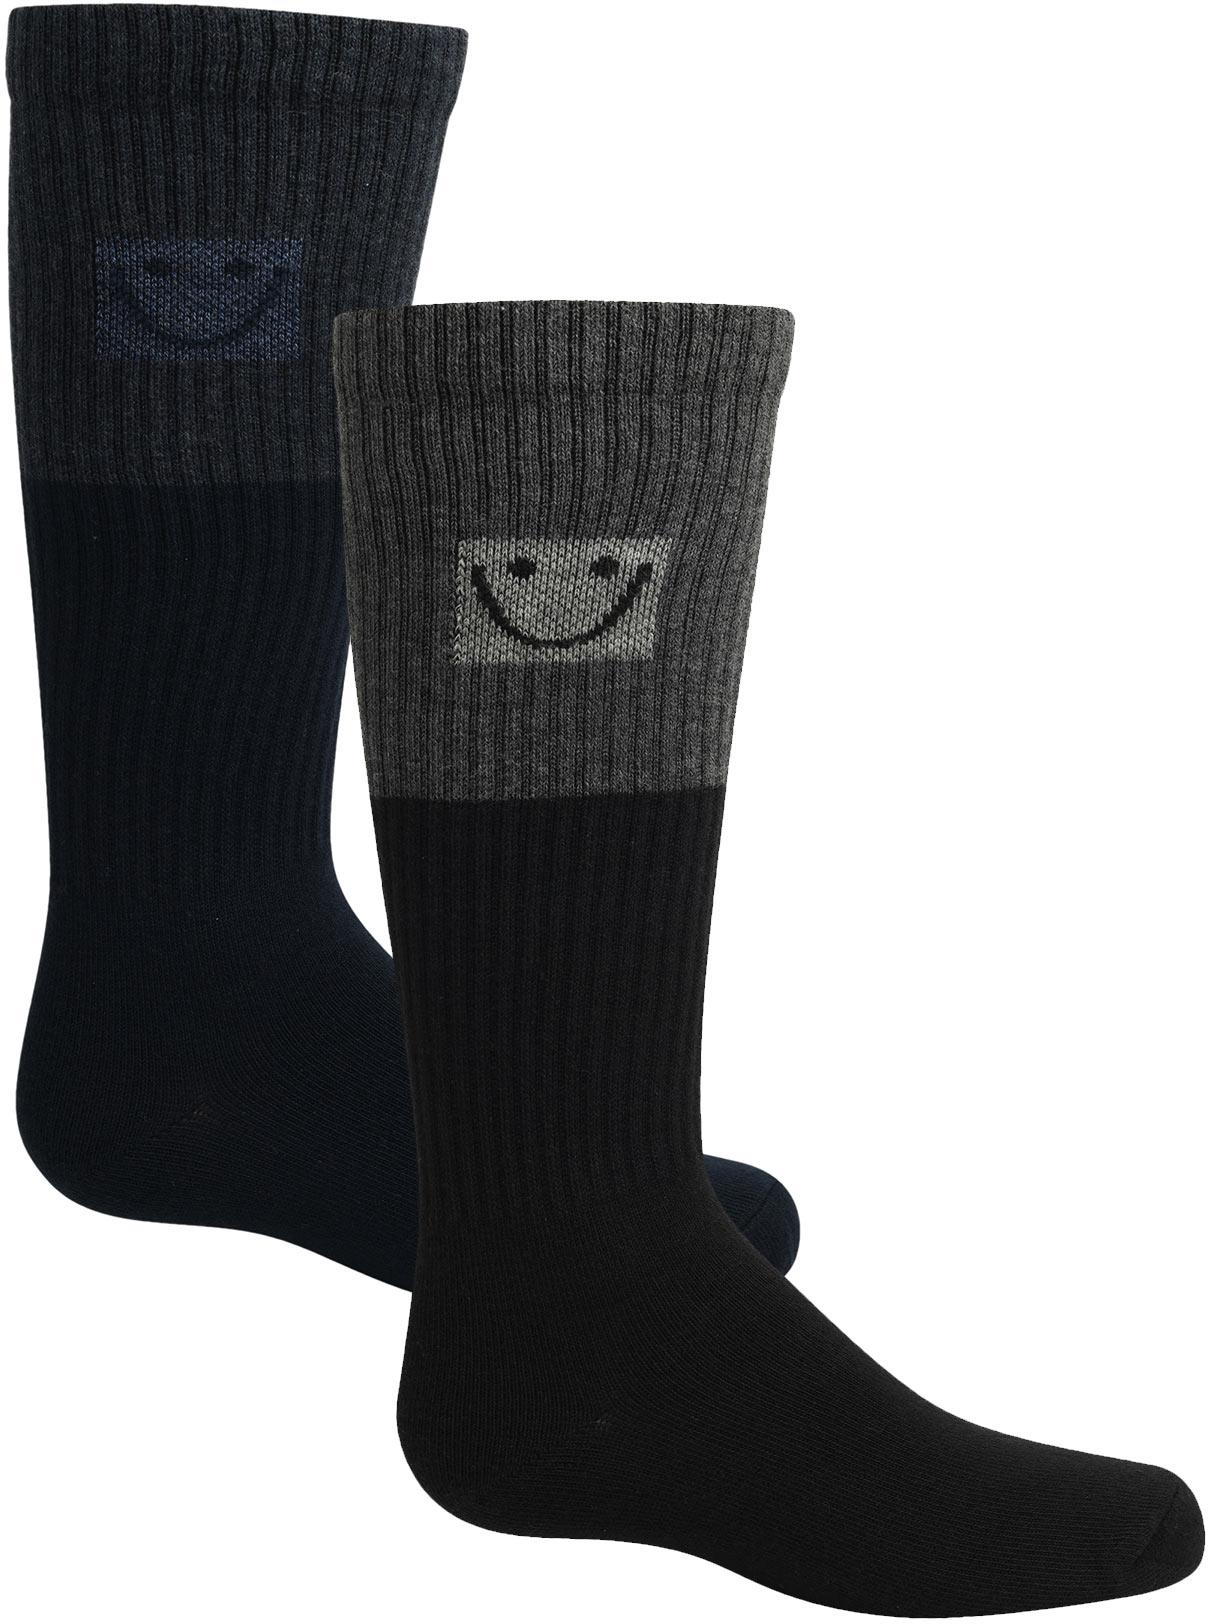 Zubii Girls Smiley Square Knee Socks - 998